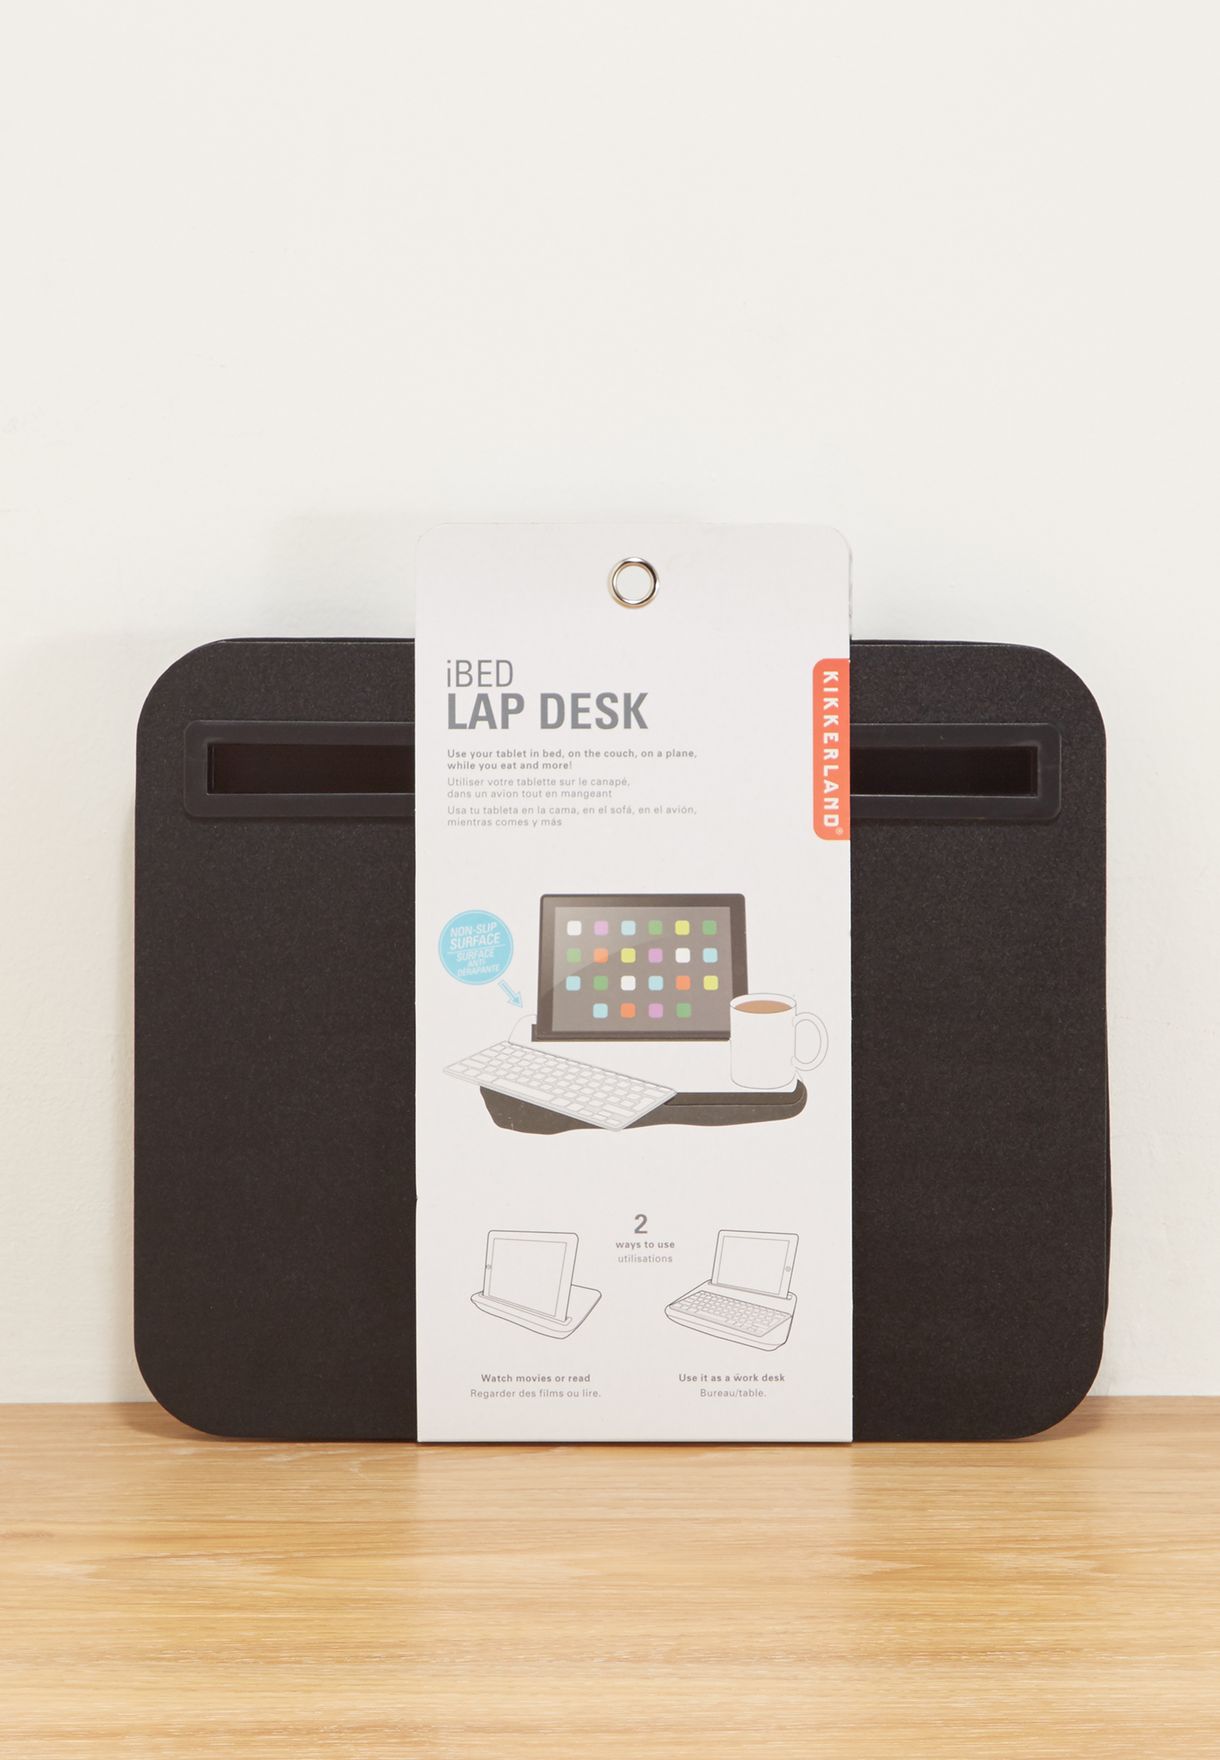 iPad iBed Lap Desk